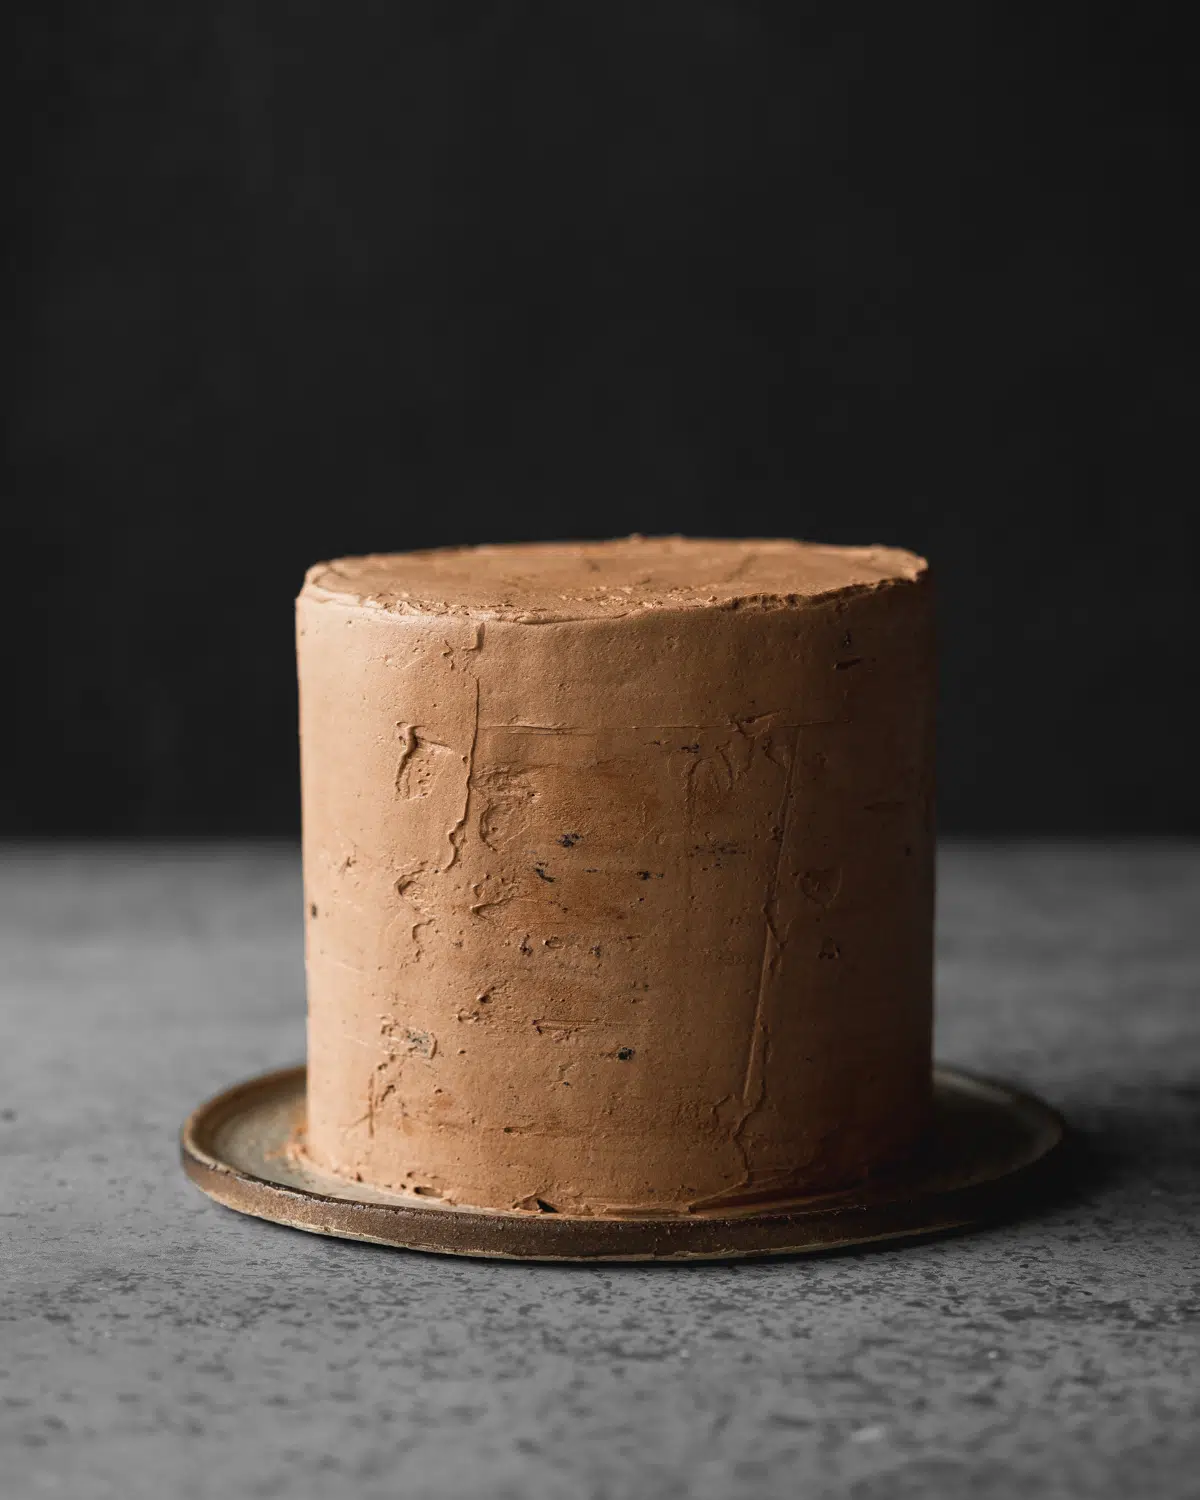 vegan chocolate cake with chocolate buttercream against dark background.